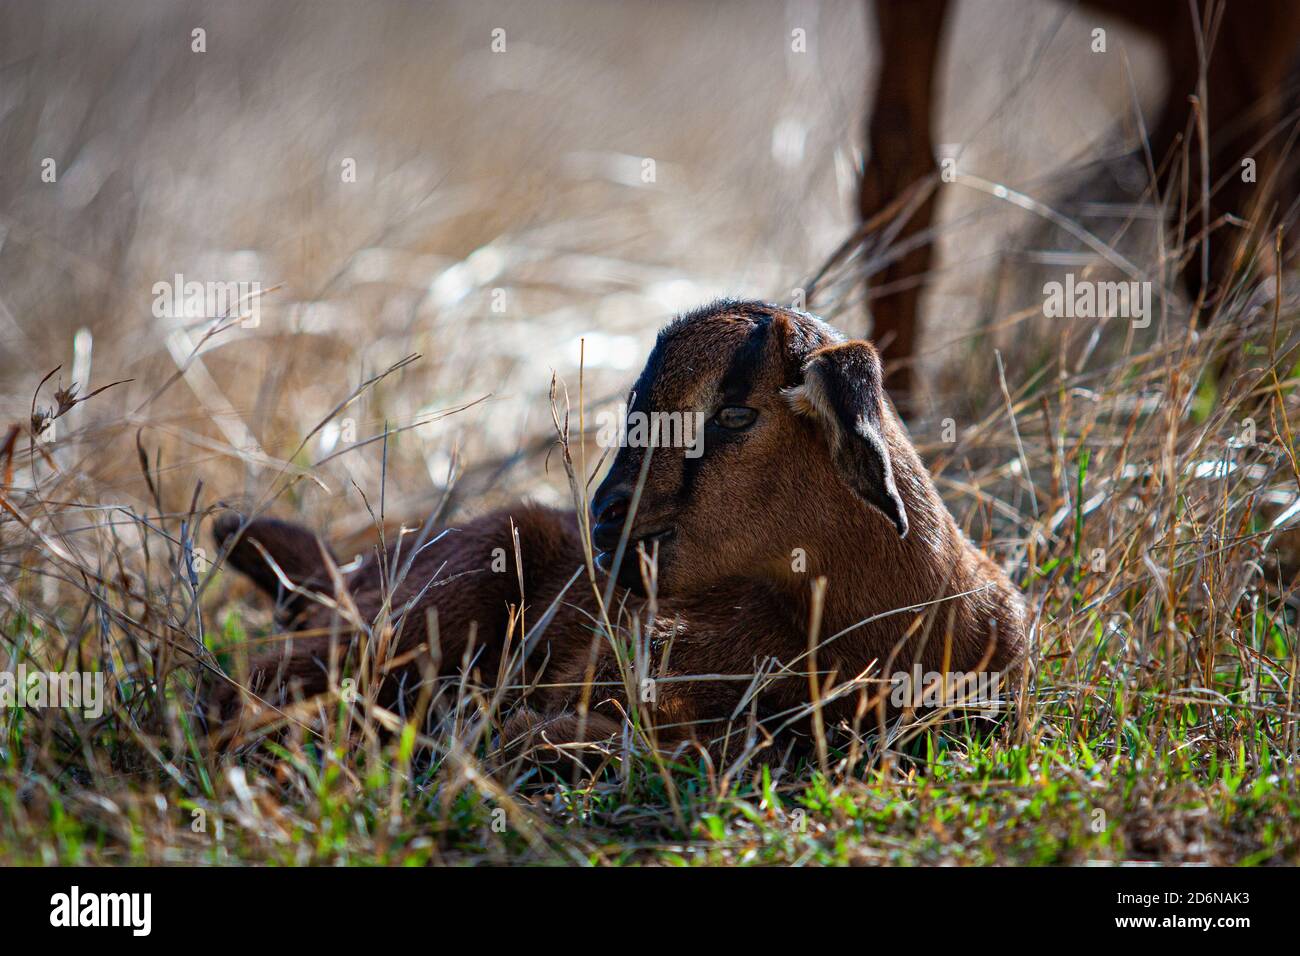 Neugeborenes Ziegenbaby auf dem Feld Stockfoto